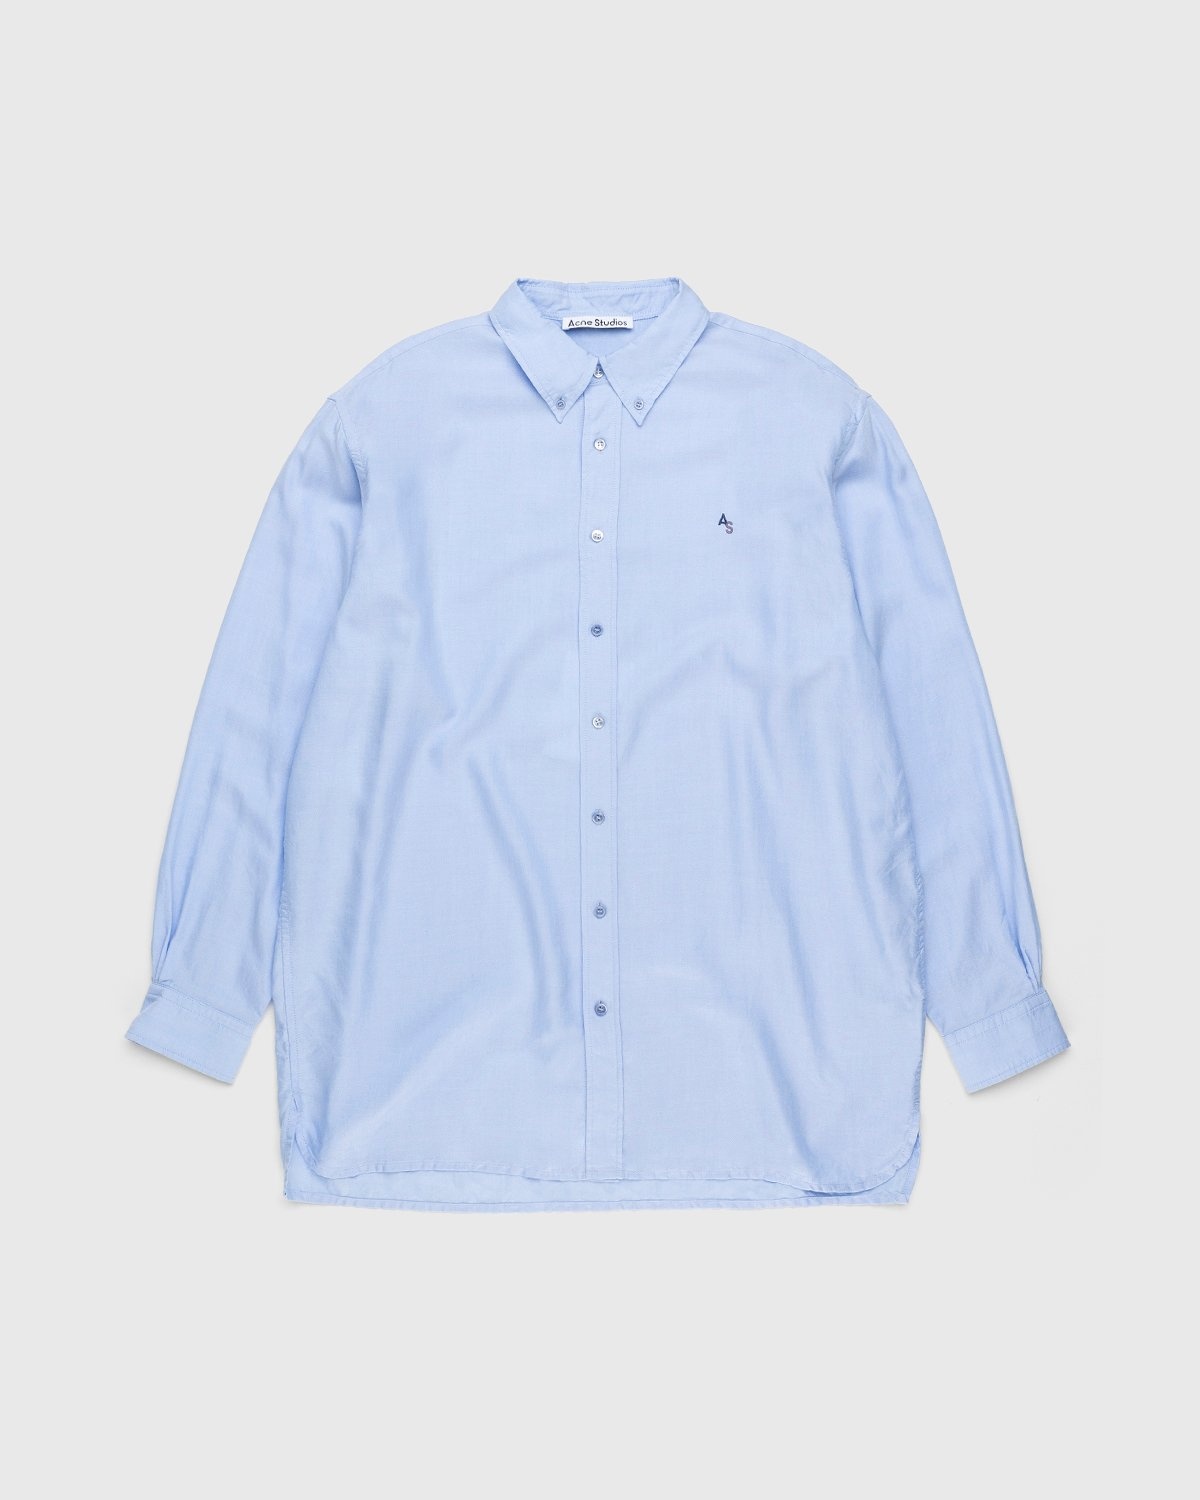 Acne Studios – Classic Monogram Button-Up Shirt Light Blue - Shirts - Blue - Image 1